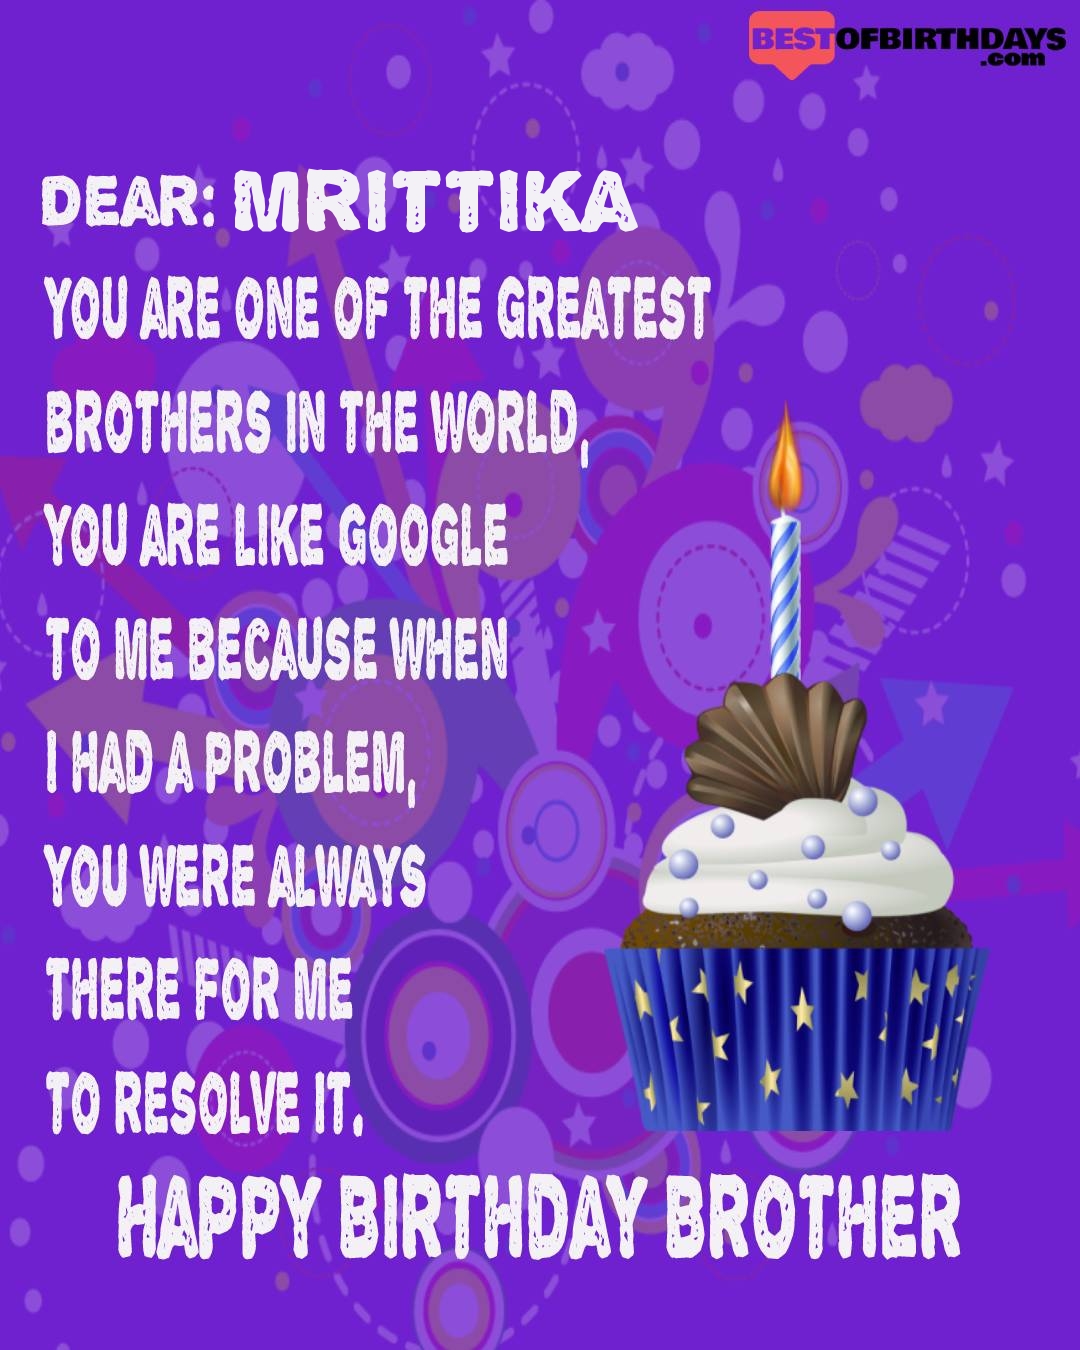 Happy birthday mrittika bhai brother bro